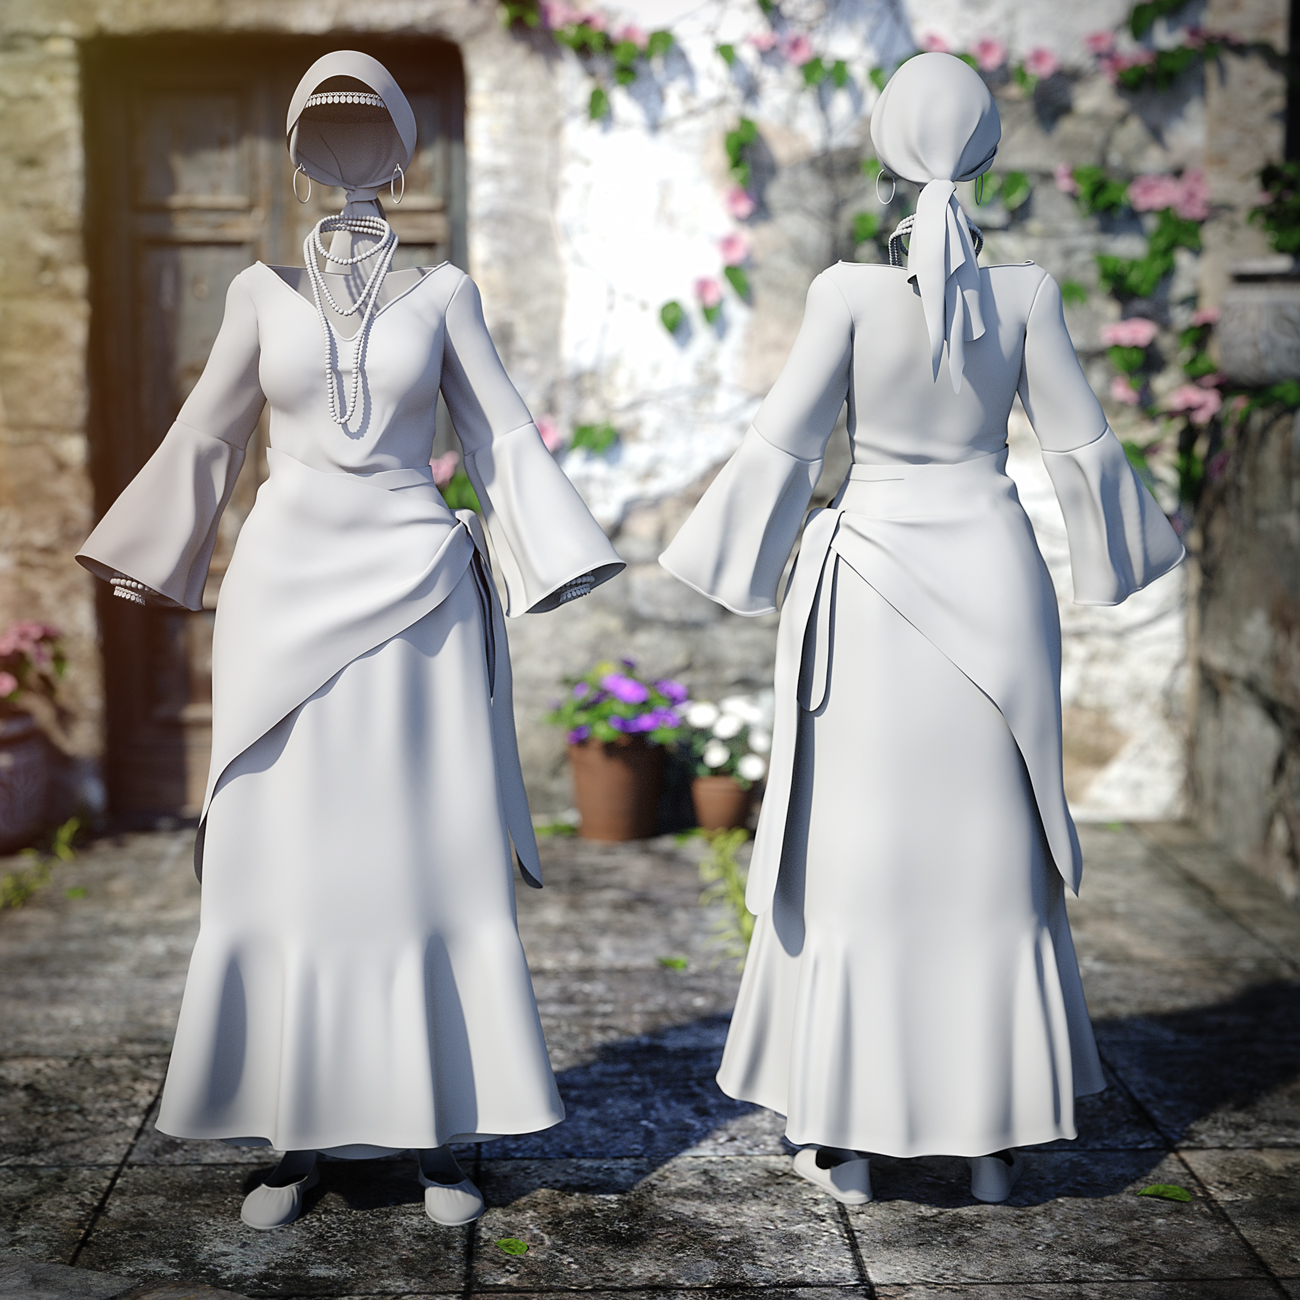 Romi for Genesis 3 Female(s) by: Ravenhair, 3D Models by Daz 3D